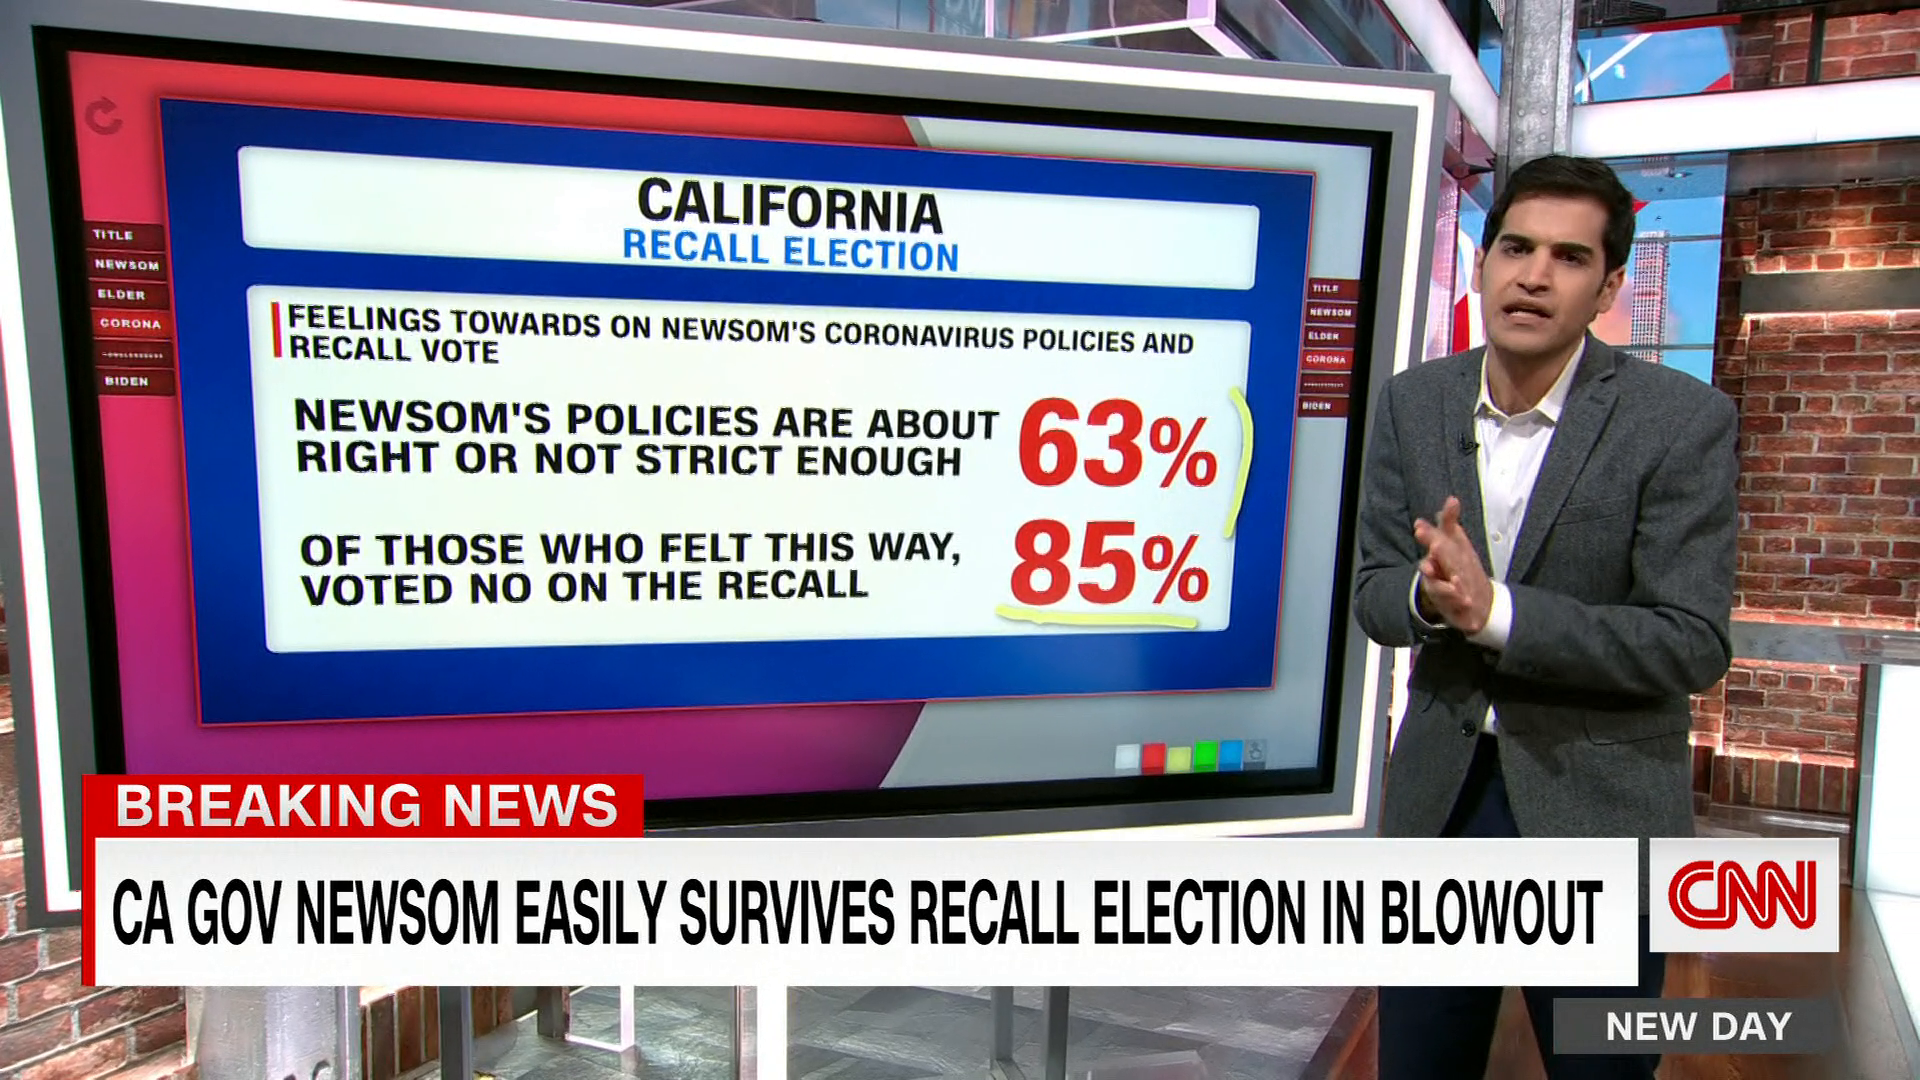 cms3-CNN-gavin-newsom-california-recall-election-results-enten-poll-breakdown-newday-vpx-primary-126071-446346-1.png